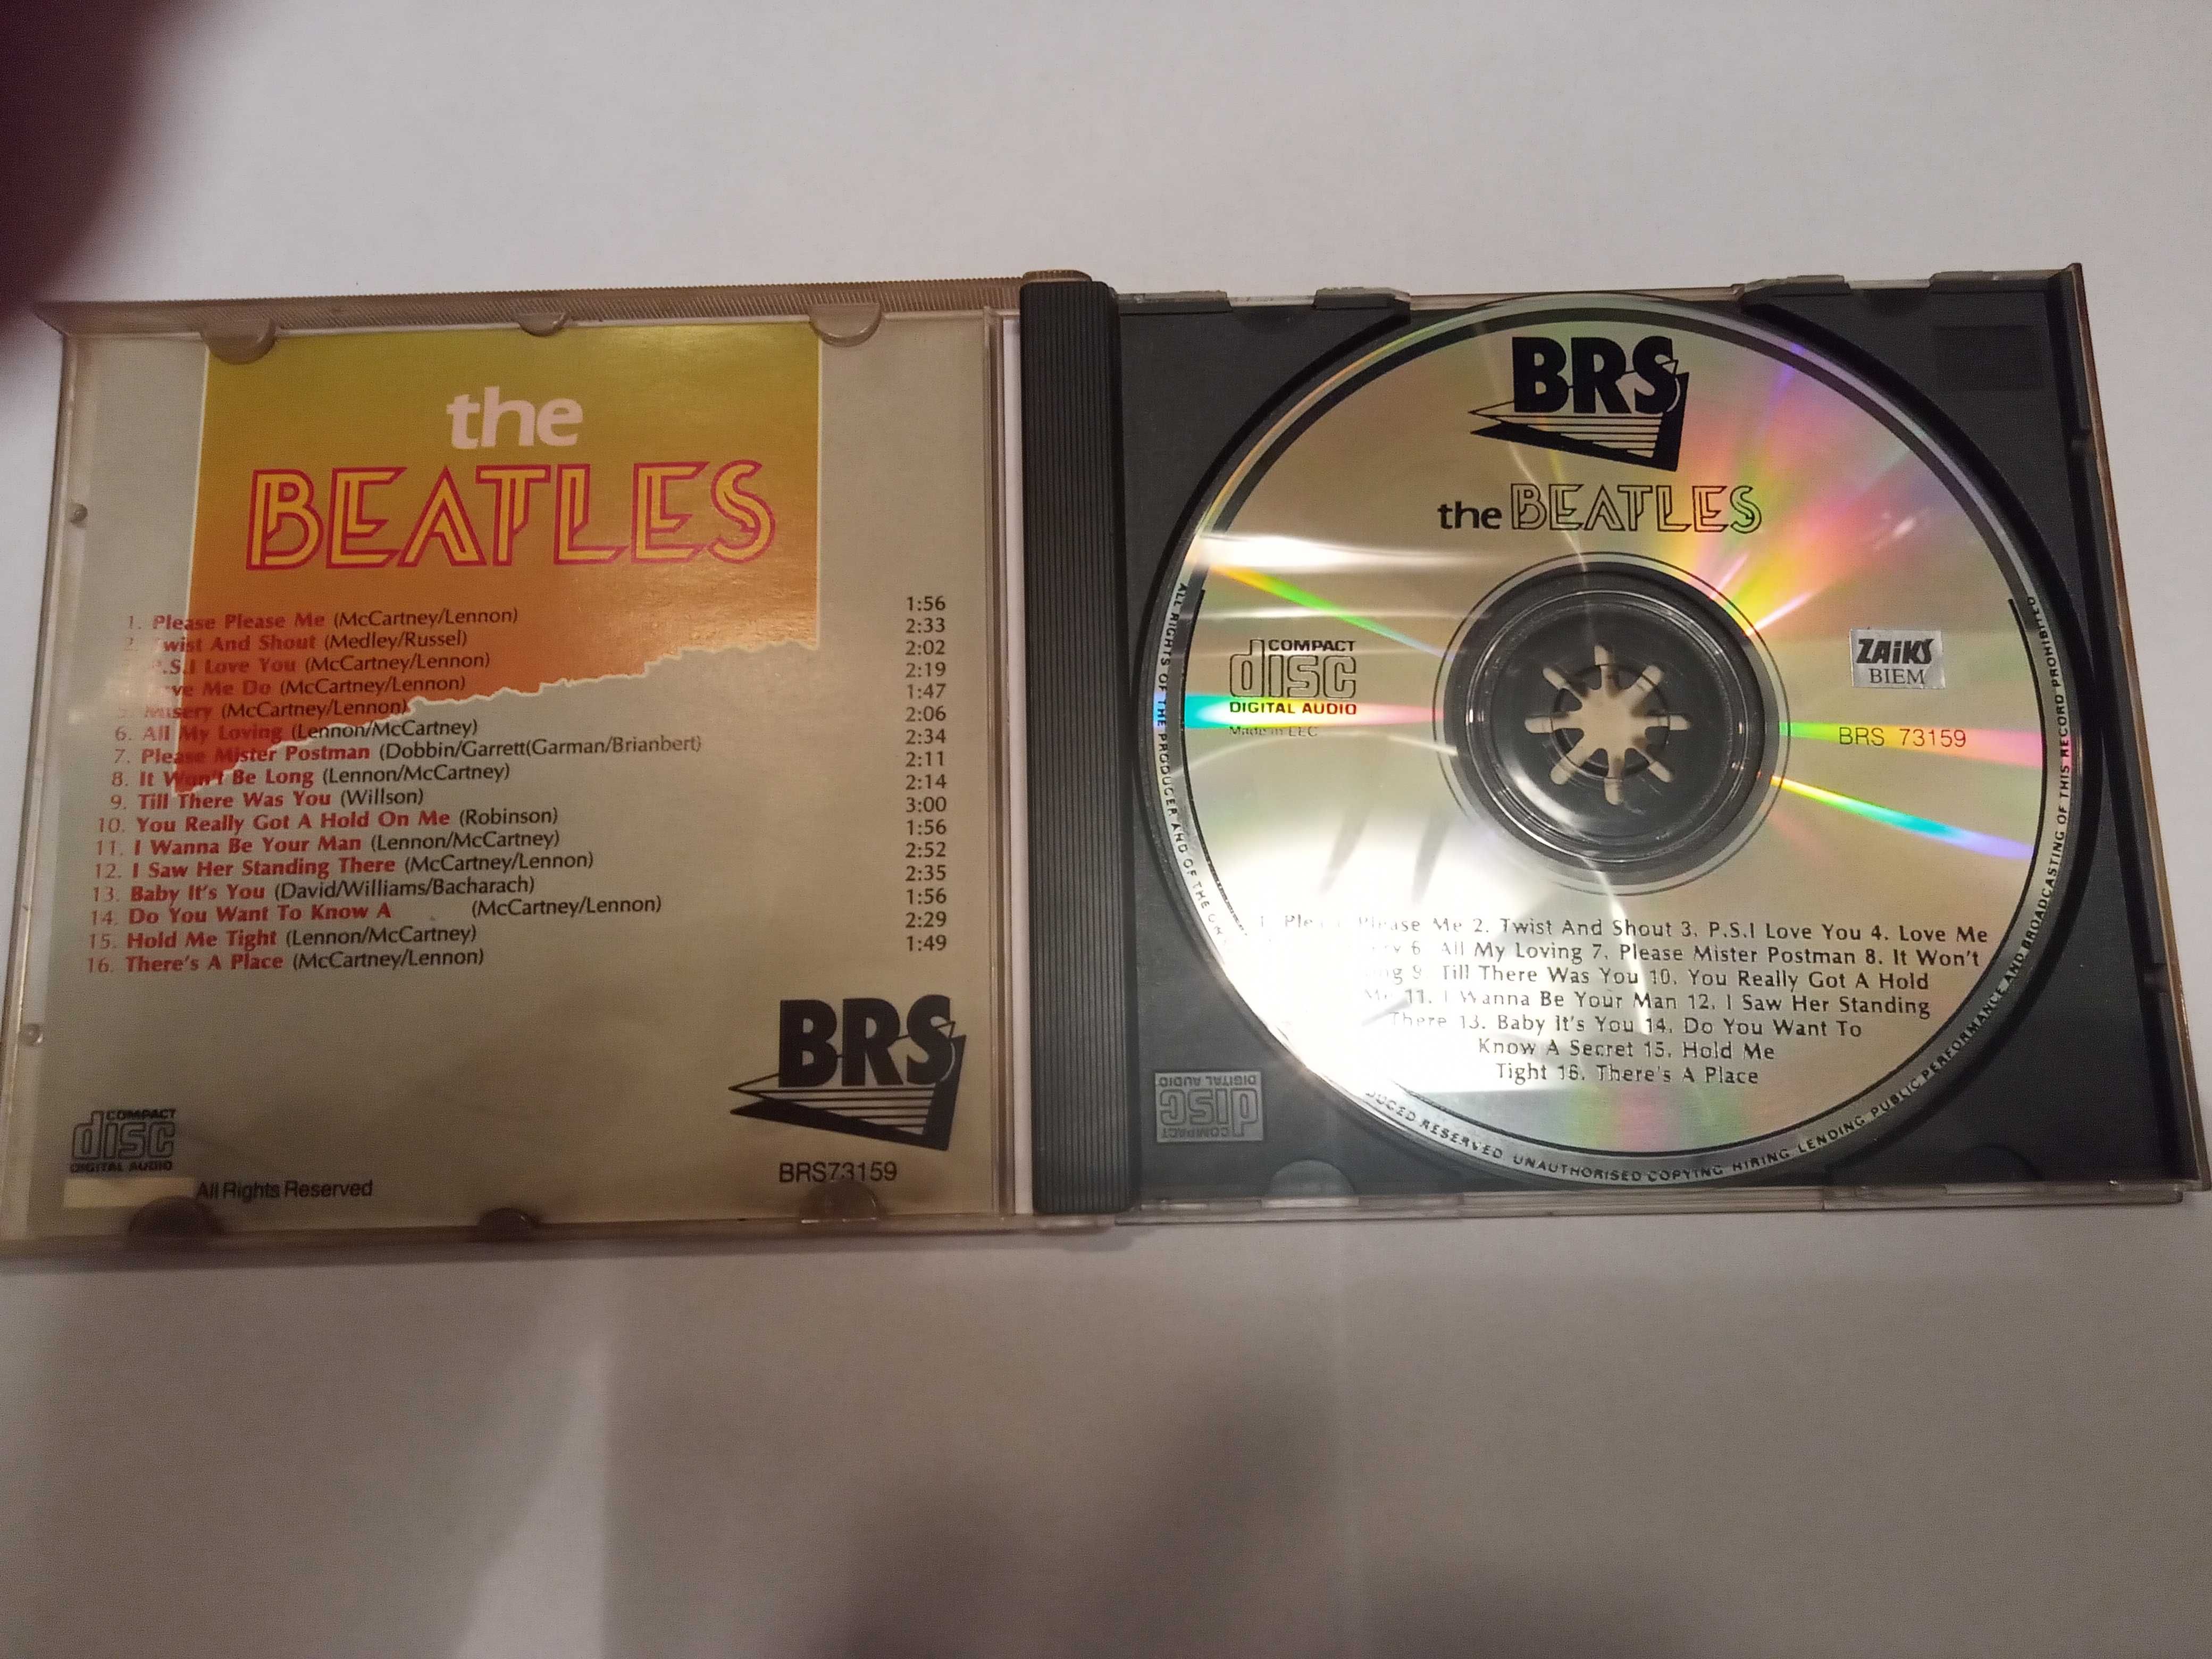 Płyta CD The Beatles "The Beatles" wyd. BRS